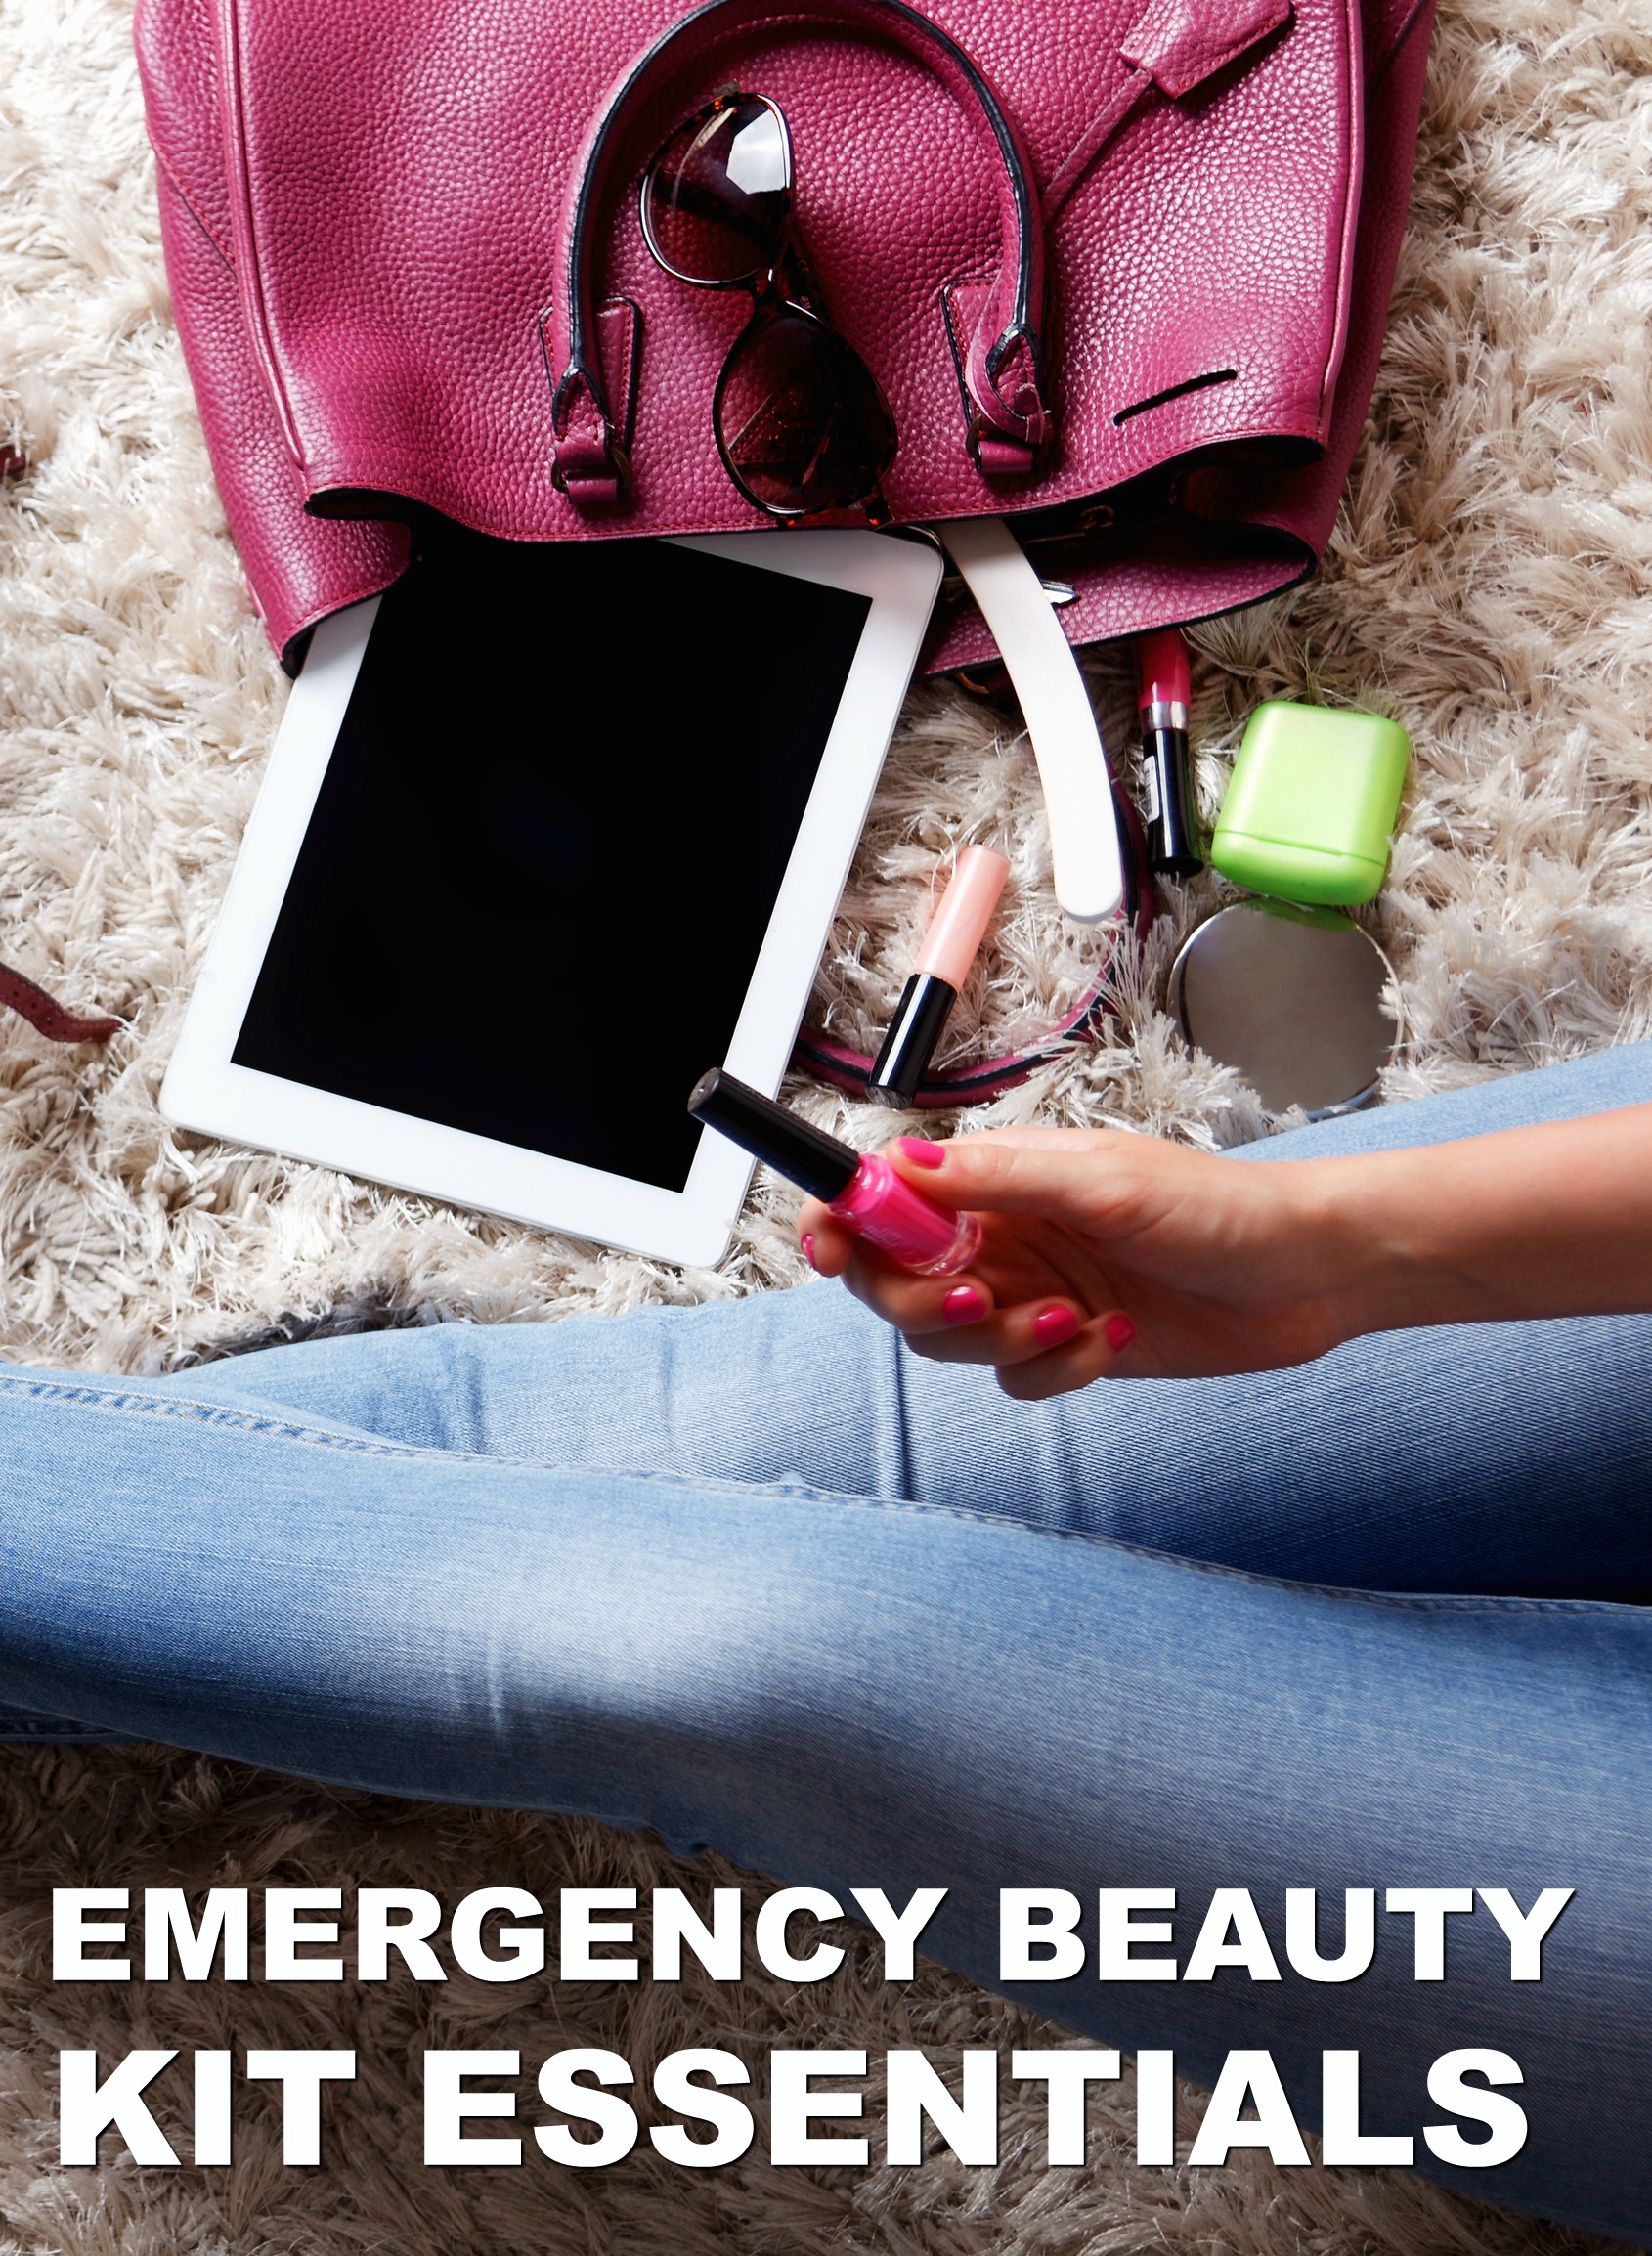 How to Make an Emergency Beauty Kit